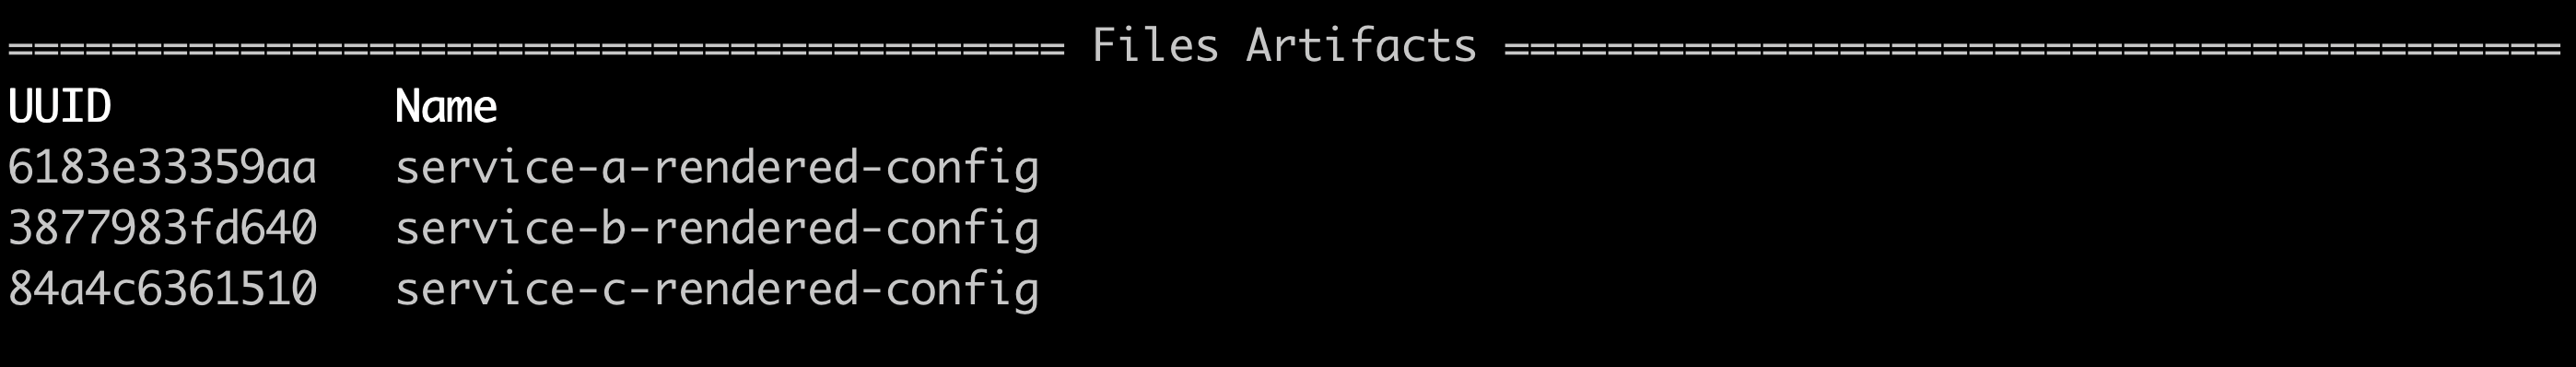 files-artifact-output-concepts.png